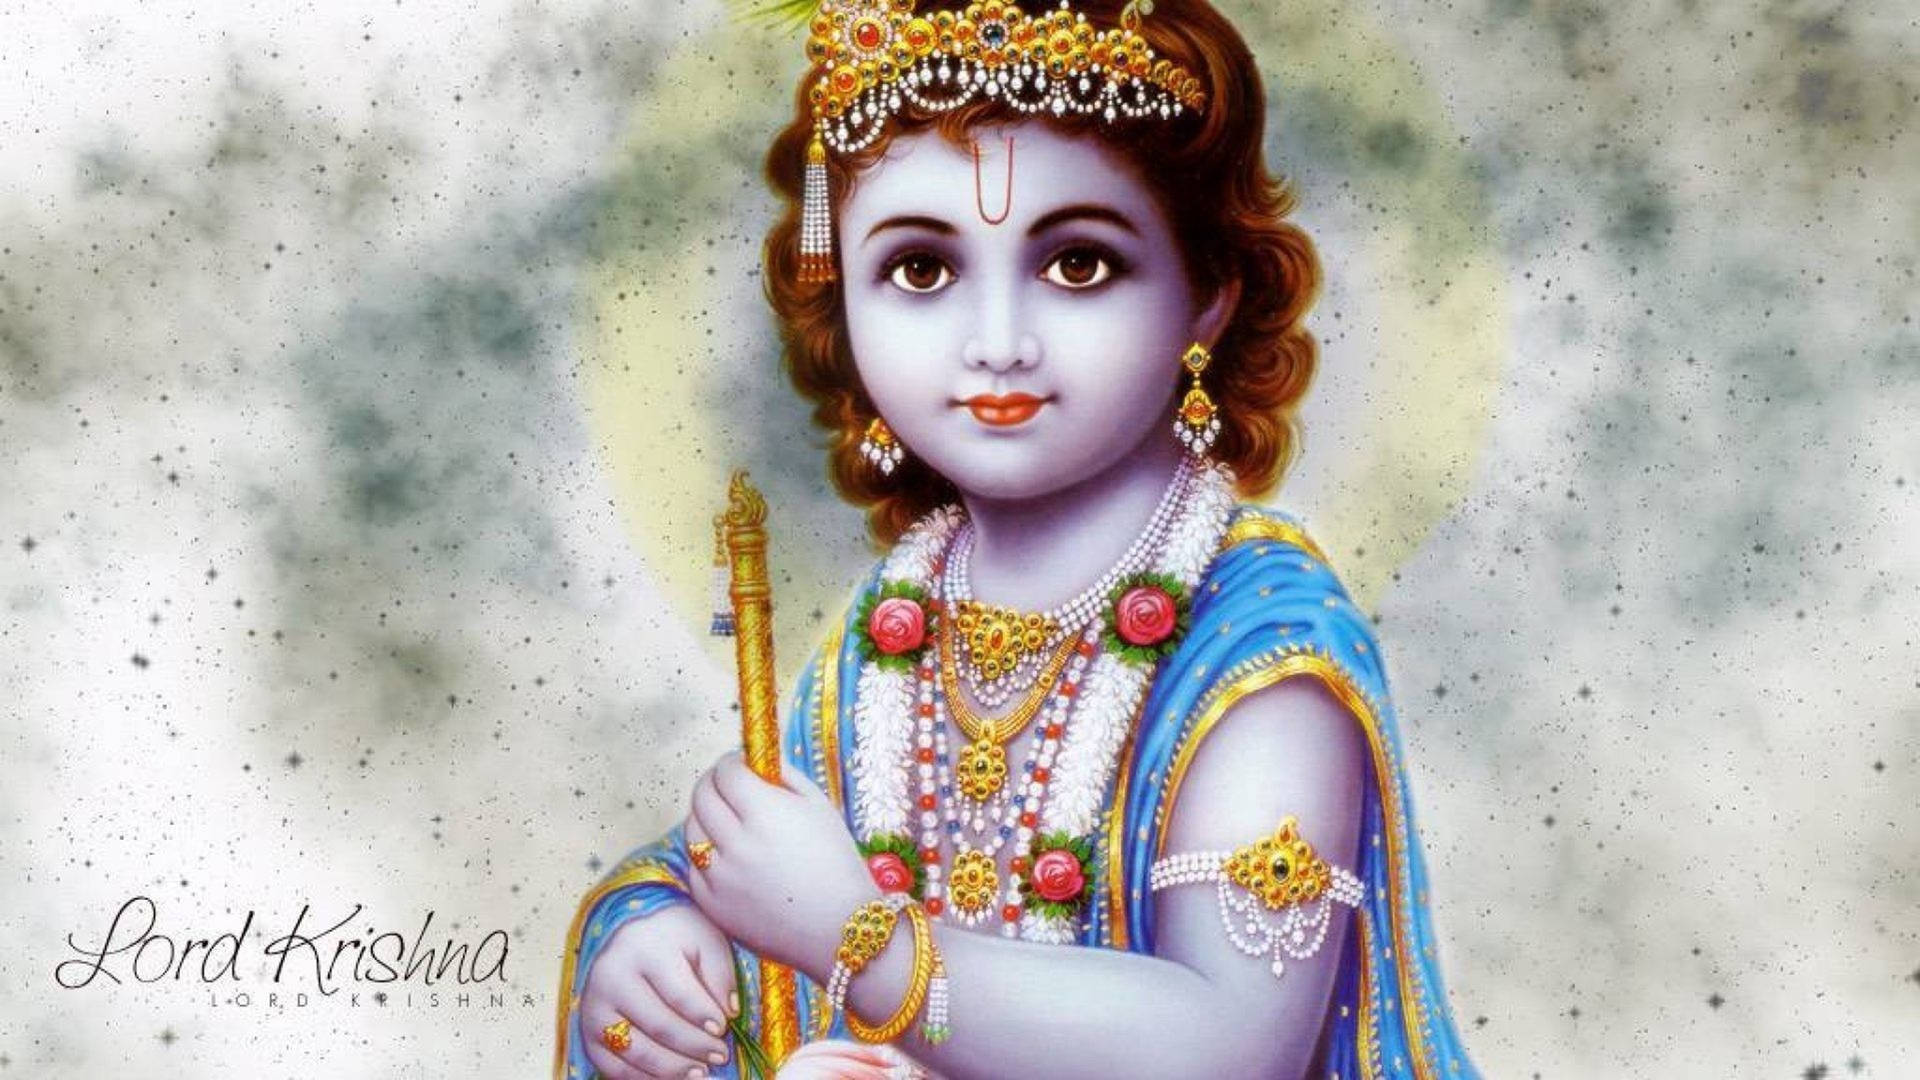 Young Lord Krishna 4k Digital Art